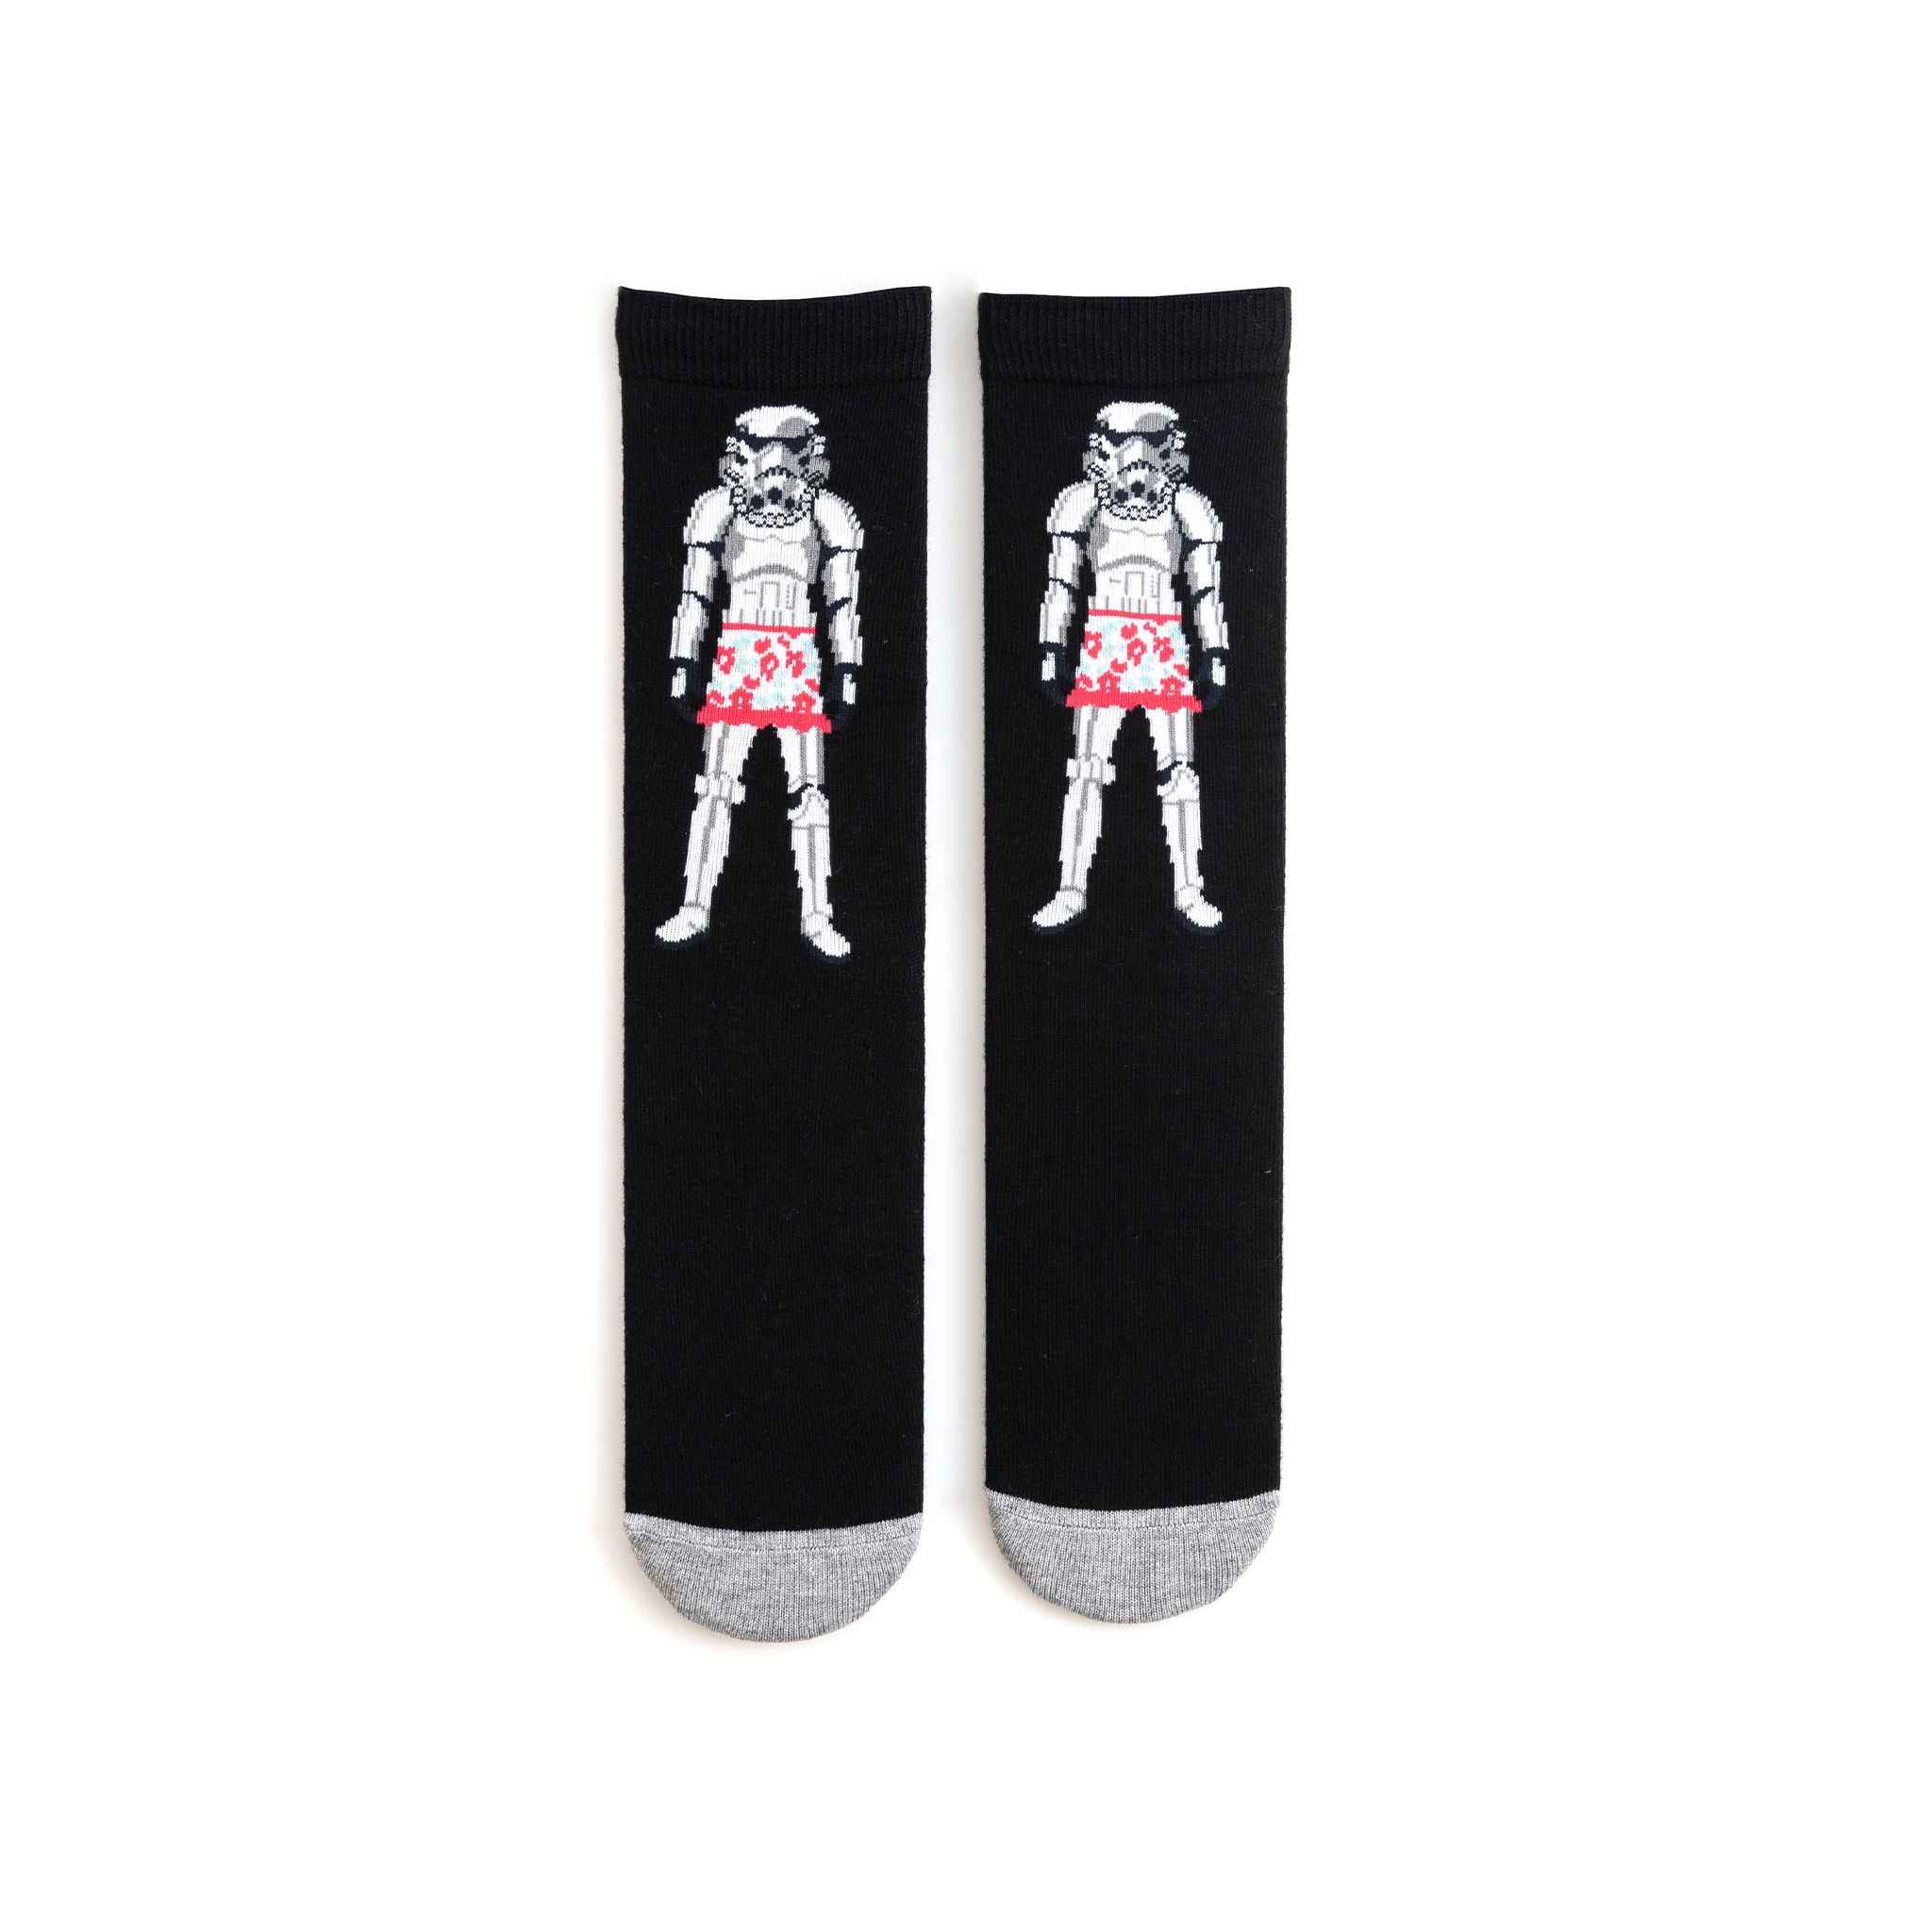 Stormtrooper Wearing A Skirt Adult Socks